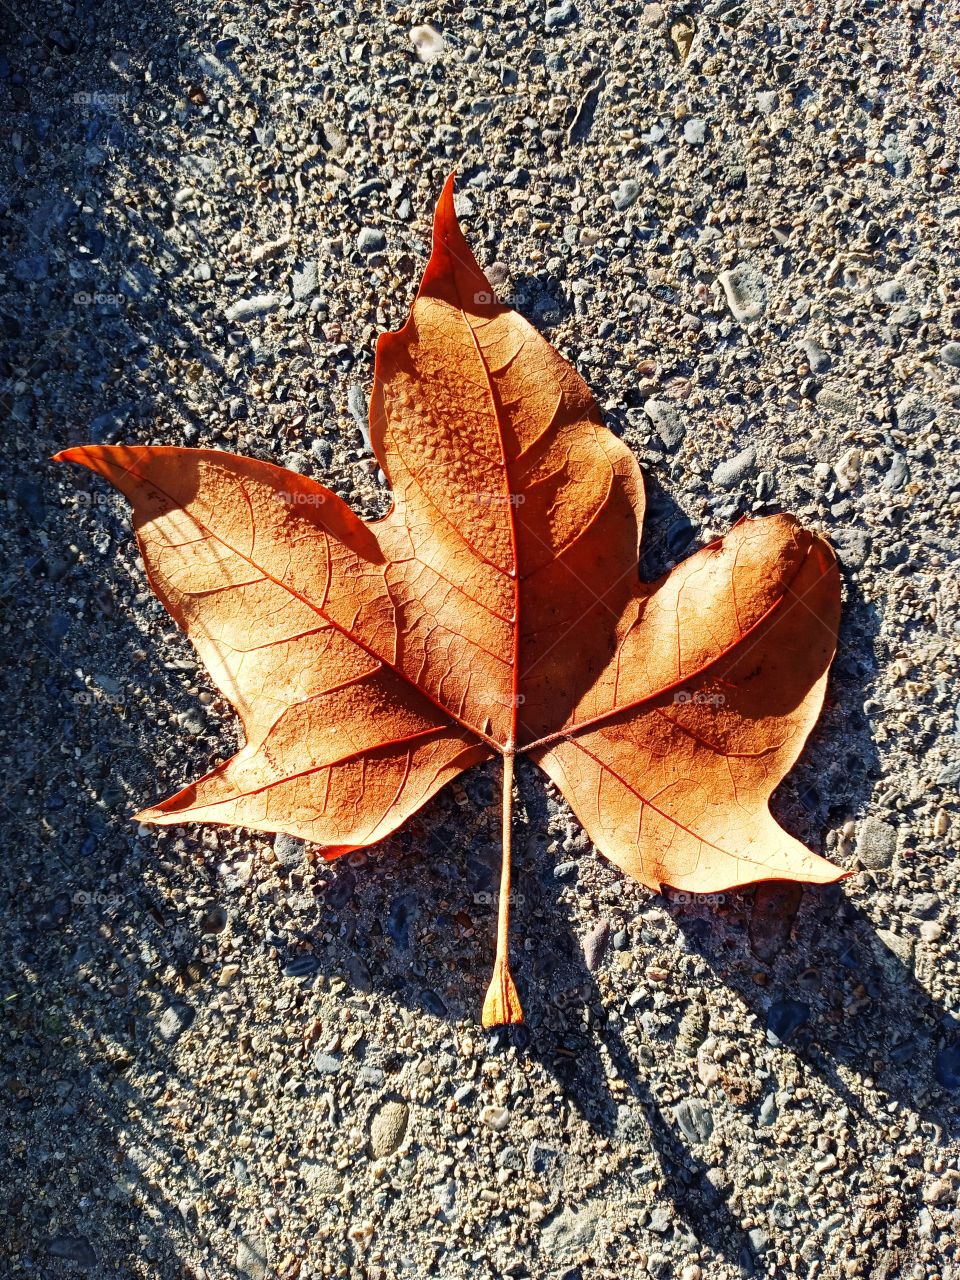 fallen leaf lying on the asphalt on a sunny day